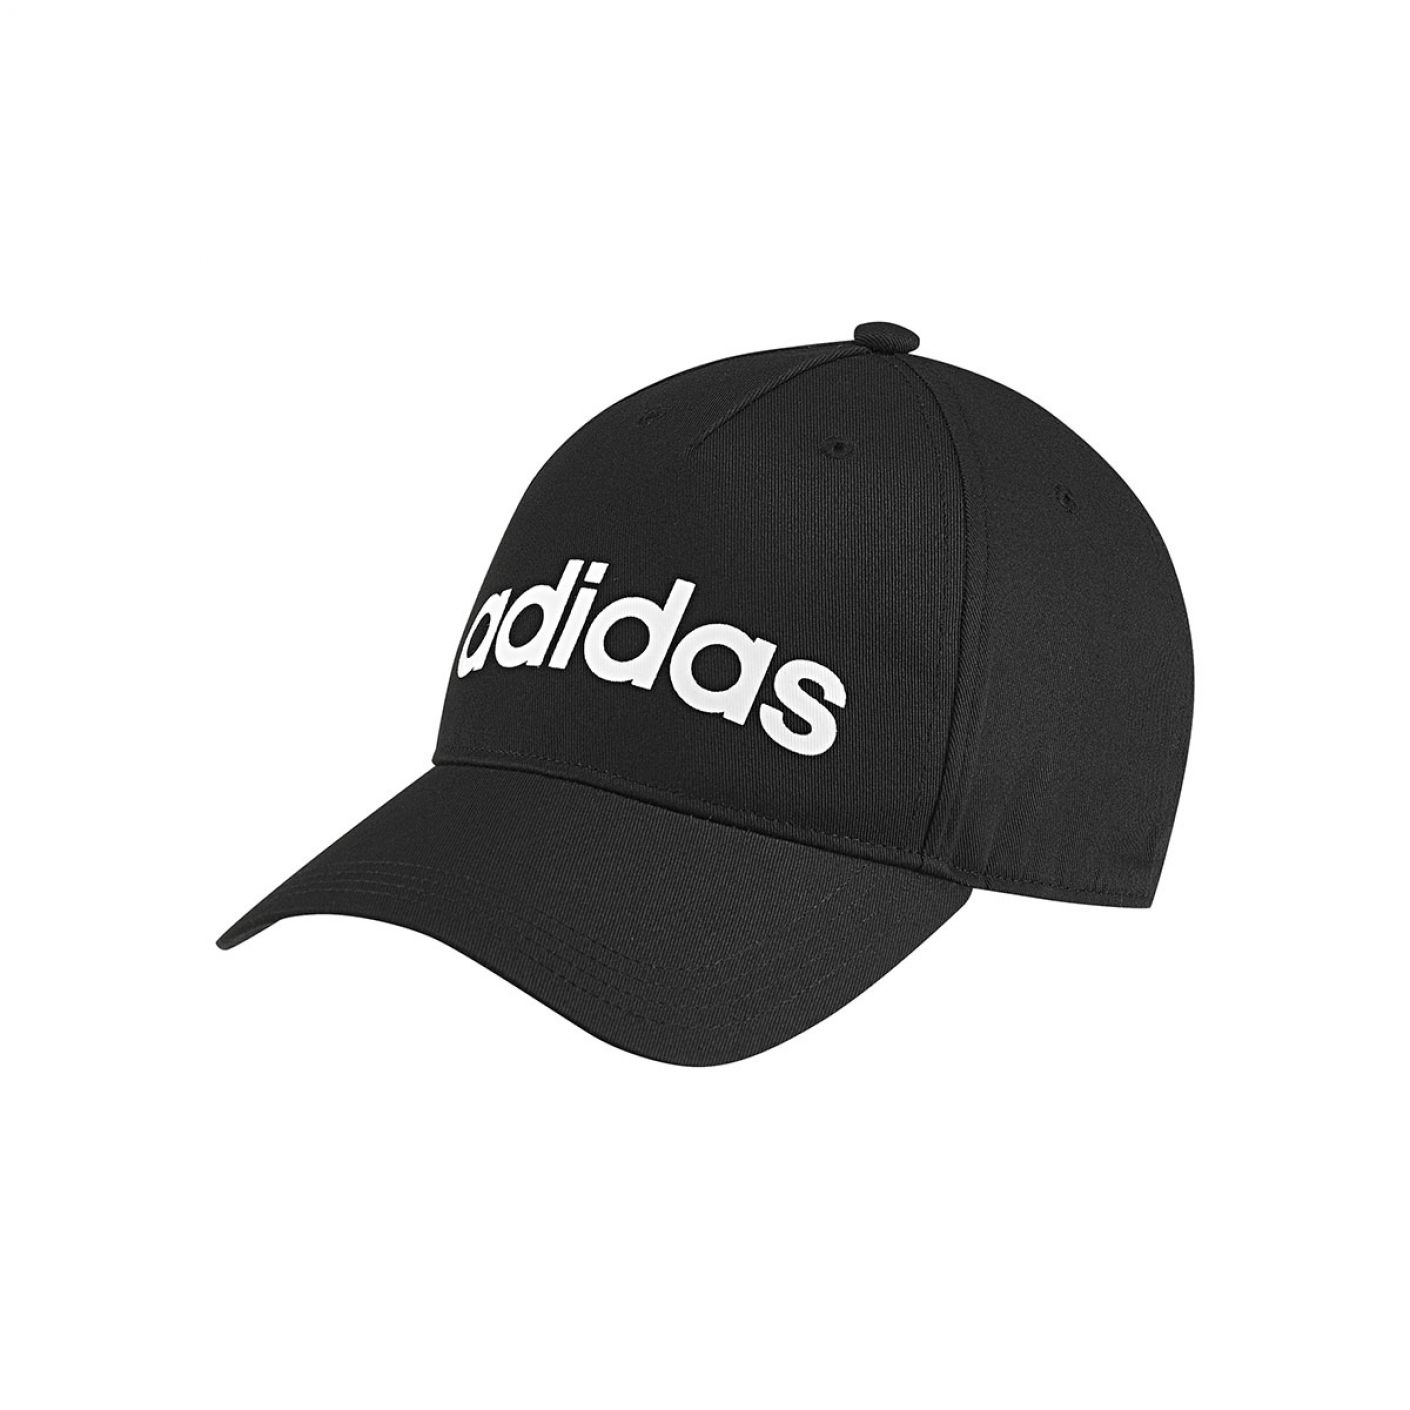 Adidas Daily Hat Black White